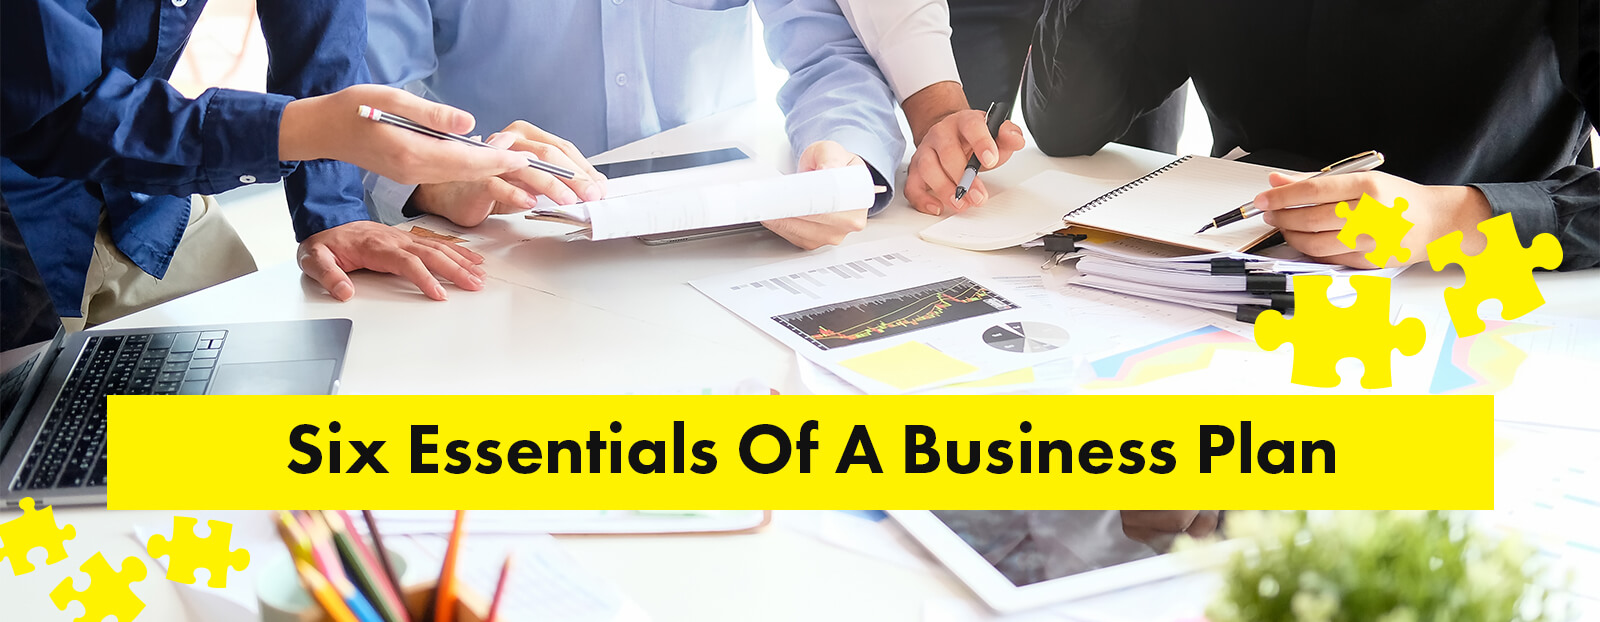 Six Essentials Of A Business Plan